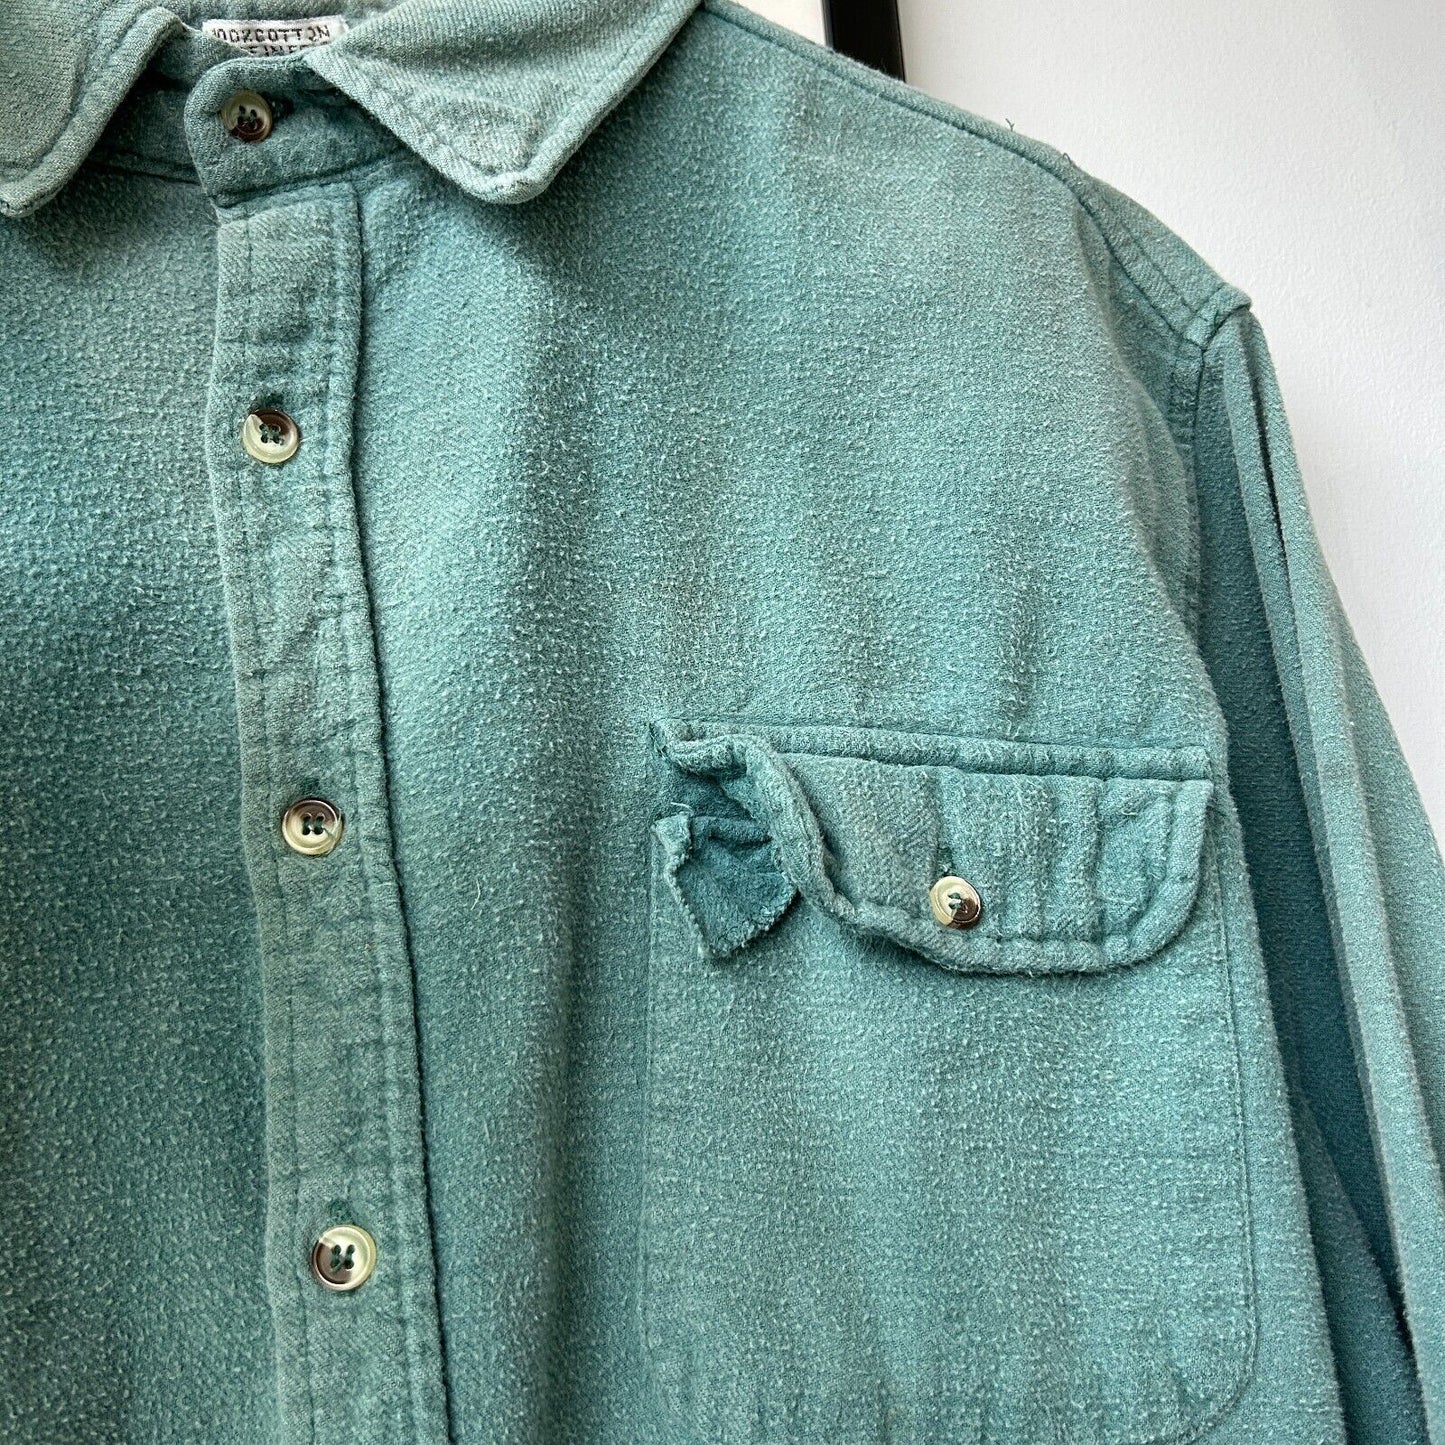 VINTAGE 90s | Sun Faded Green Chamois Button Down Shirt sz XL Adult